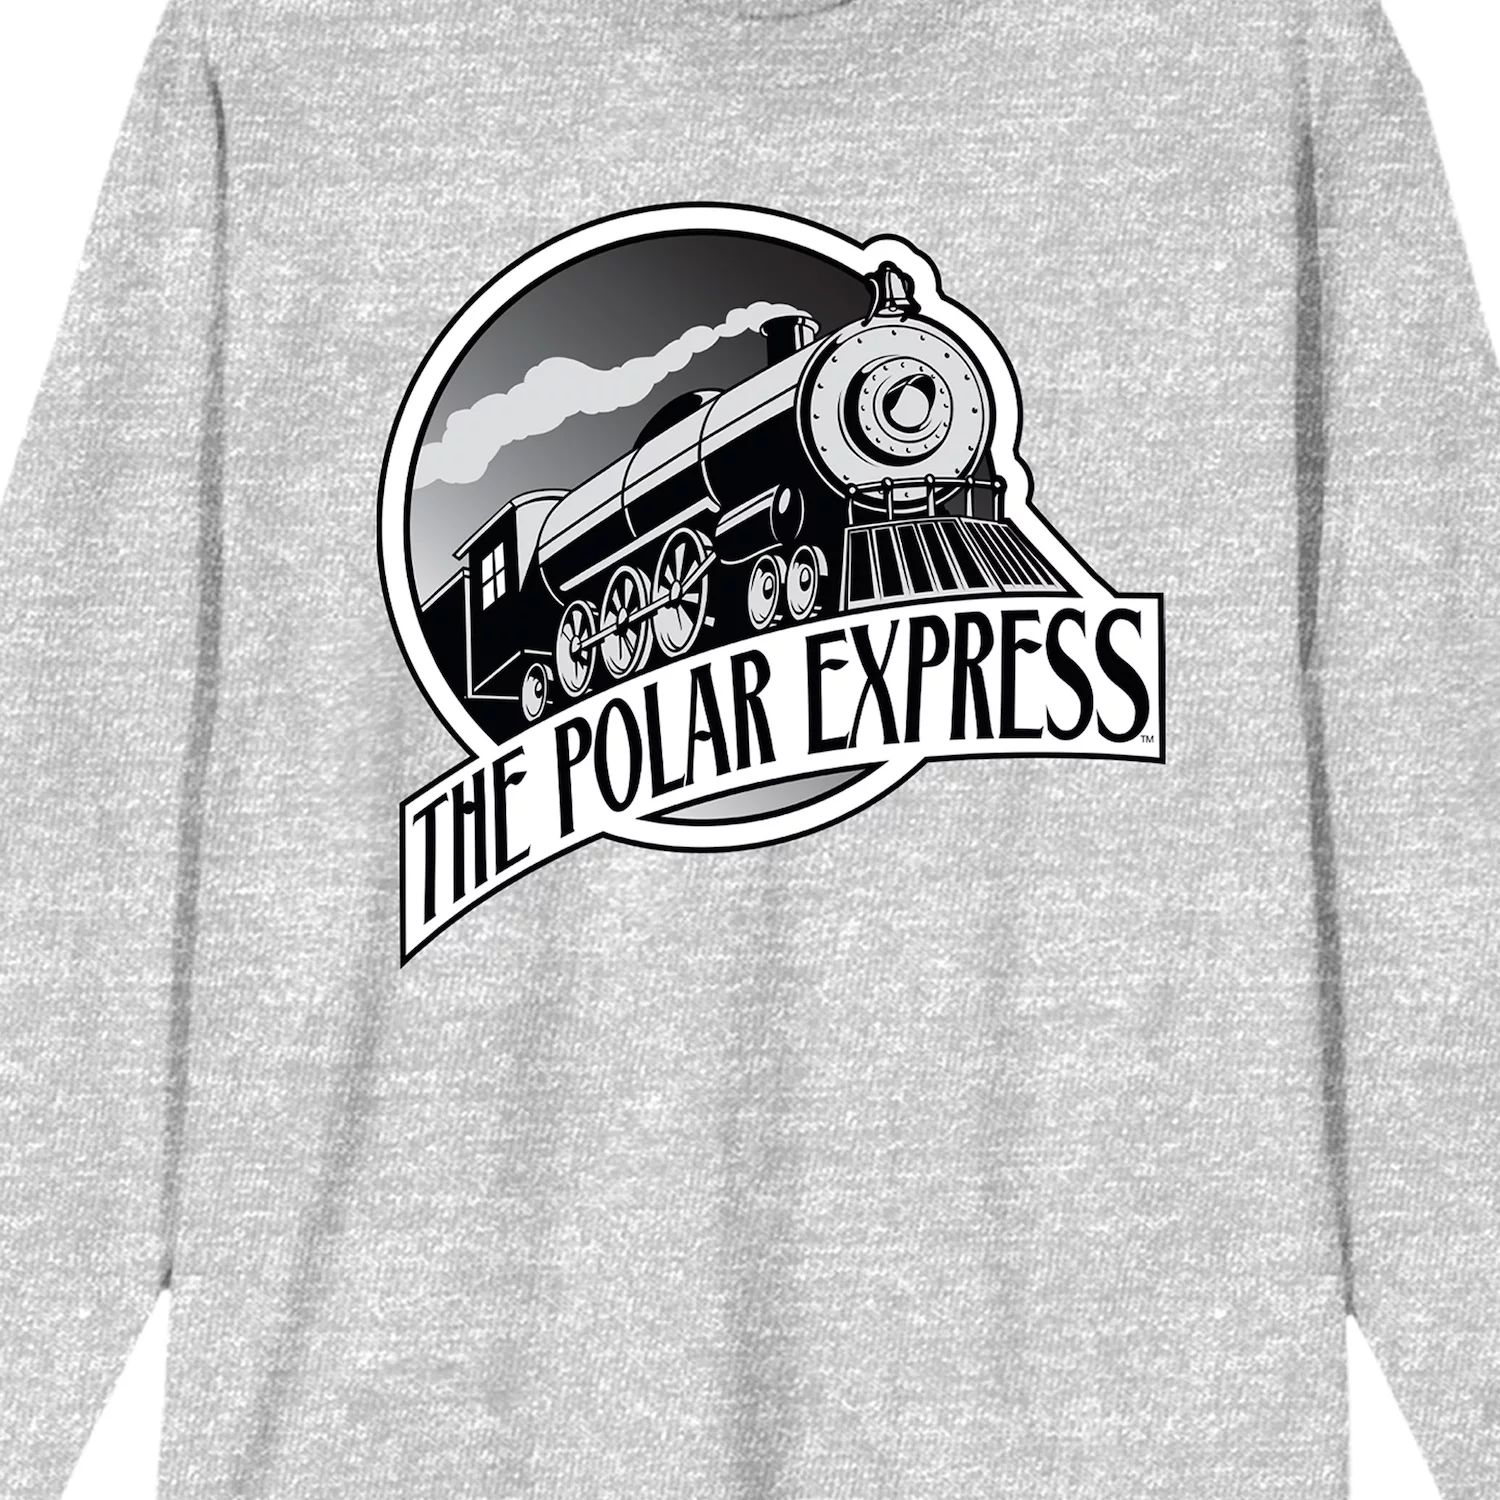 мужская футболка polar express santas sleigh licensed character Мужская футболка с длинным рукавом и логотипом Polar Express Train Licensed Character